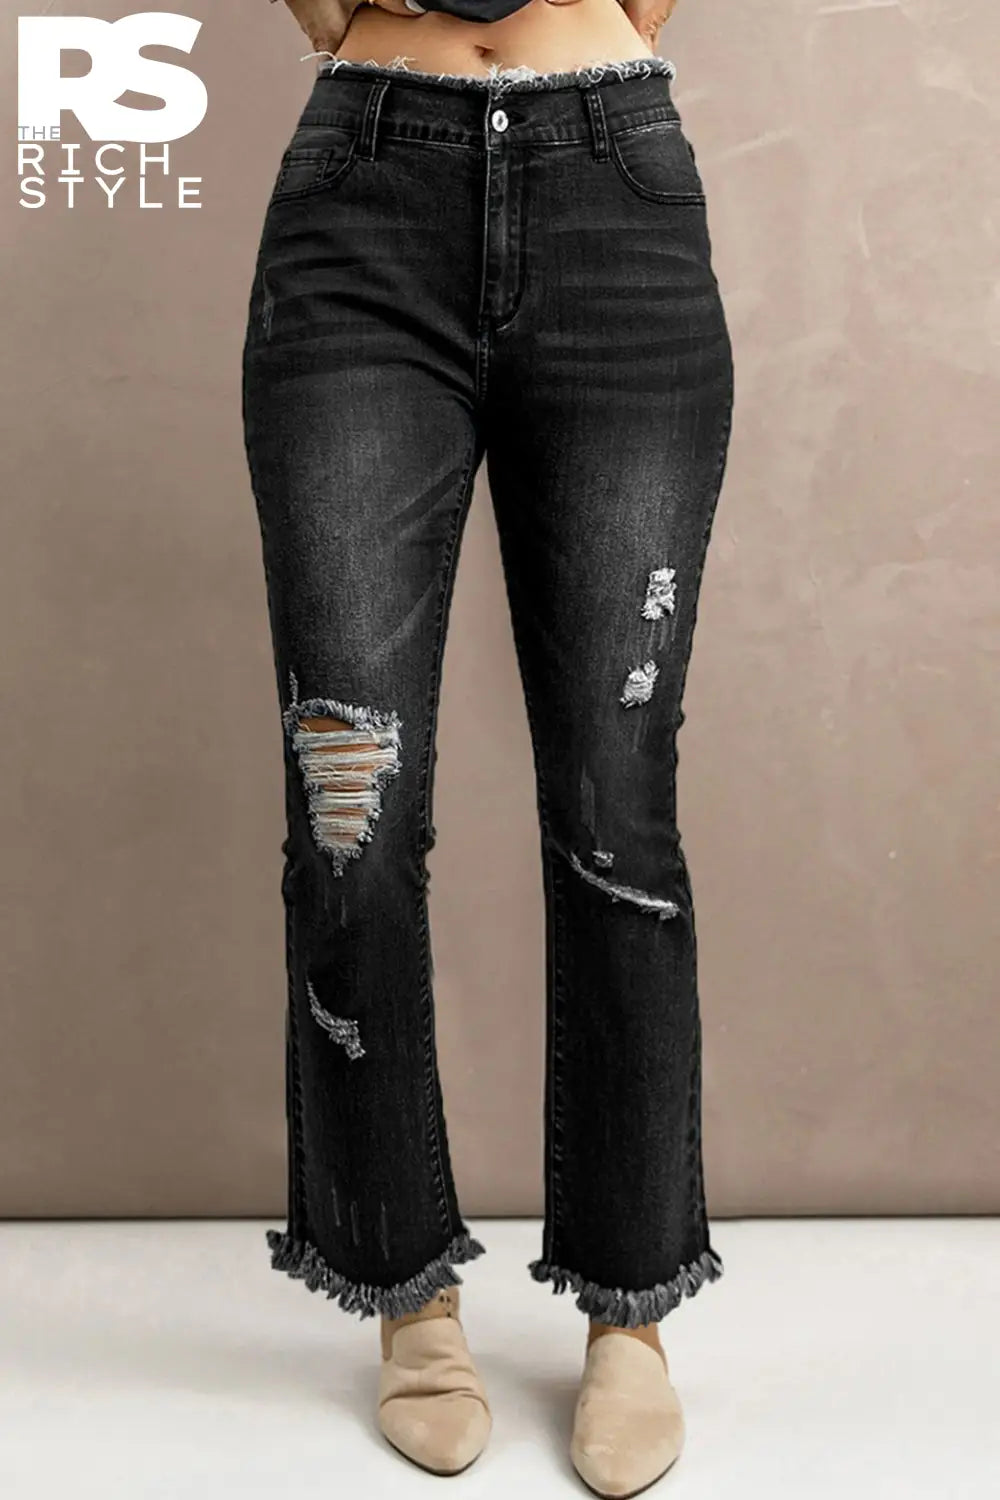 Baeful High Waist Distressed Raw Hem Jeans Black / S